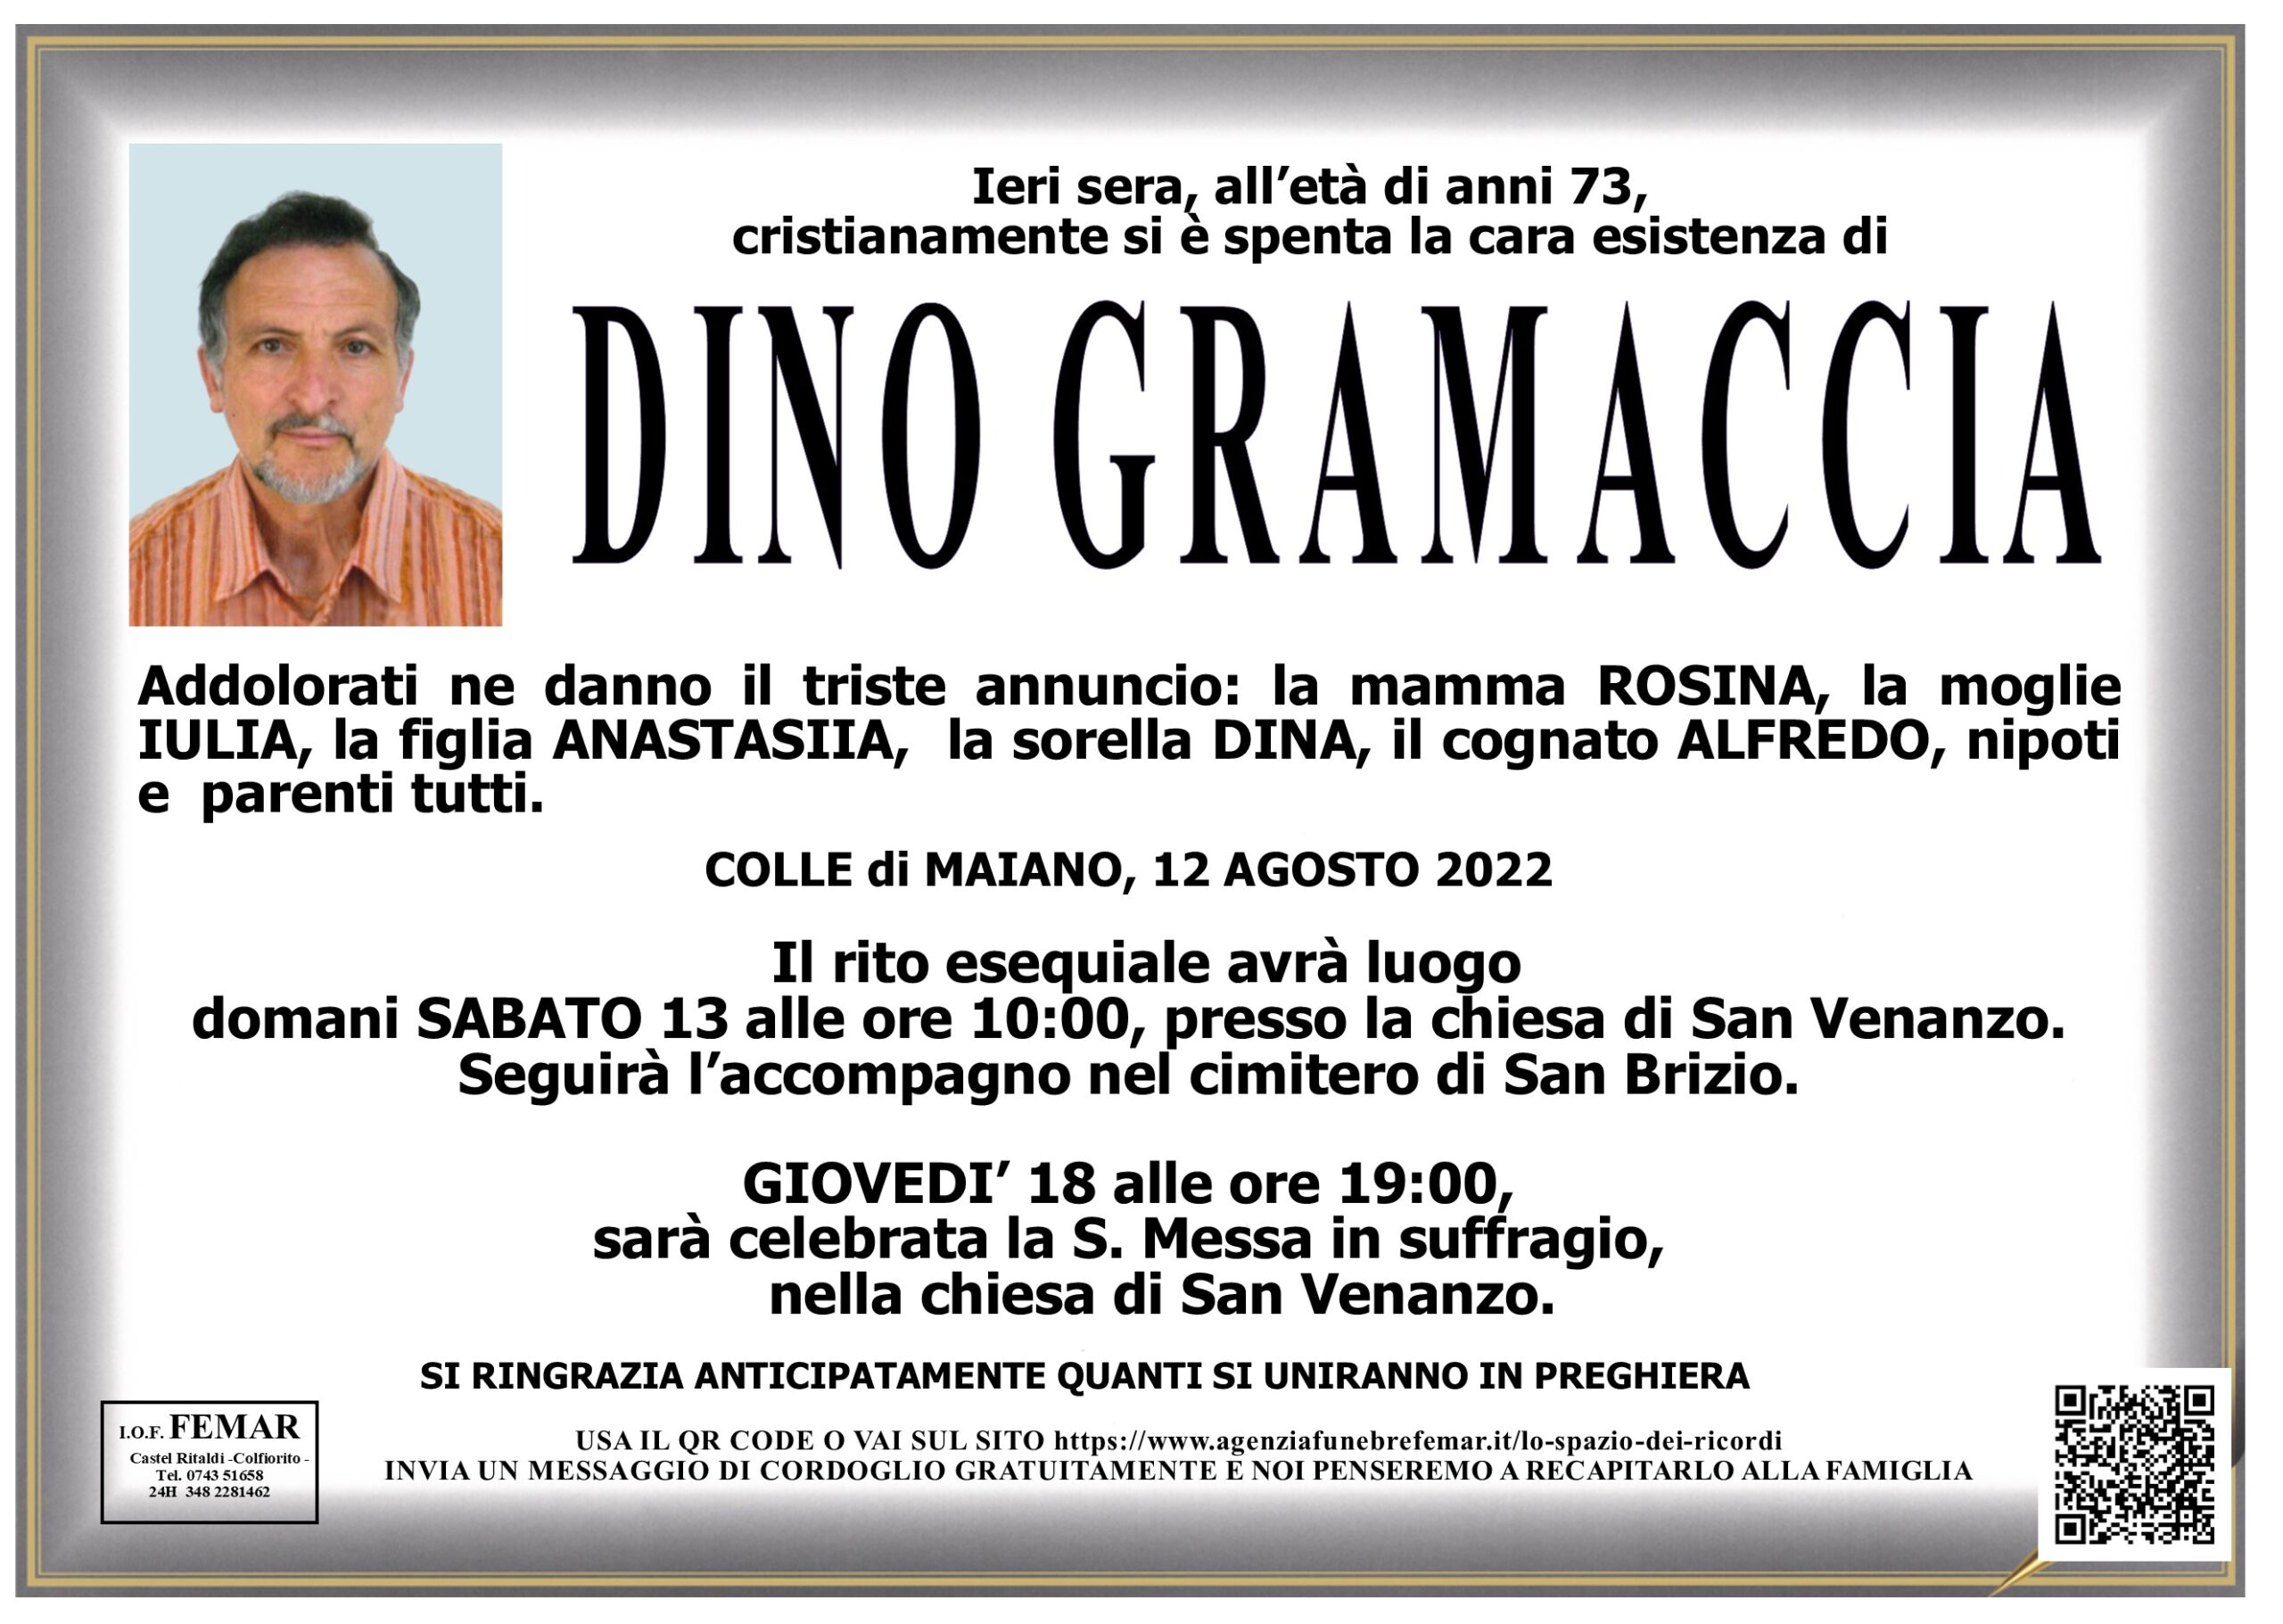 Gramaccia Dino